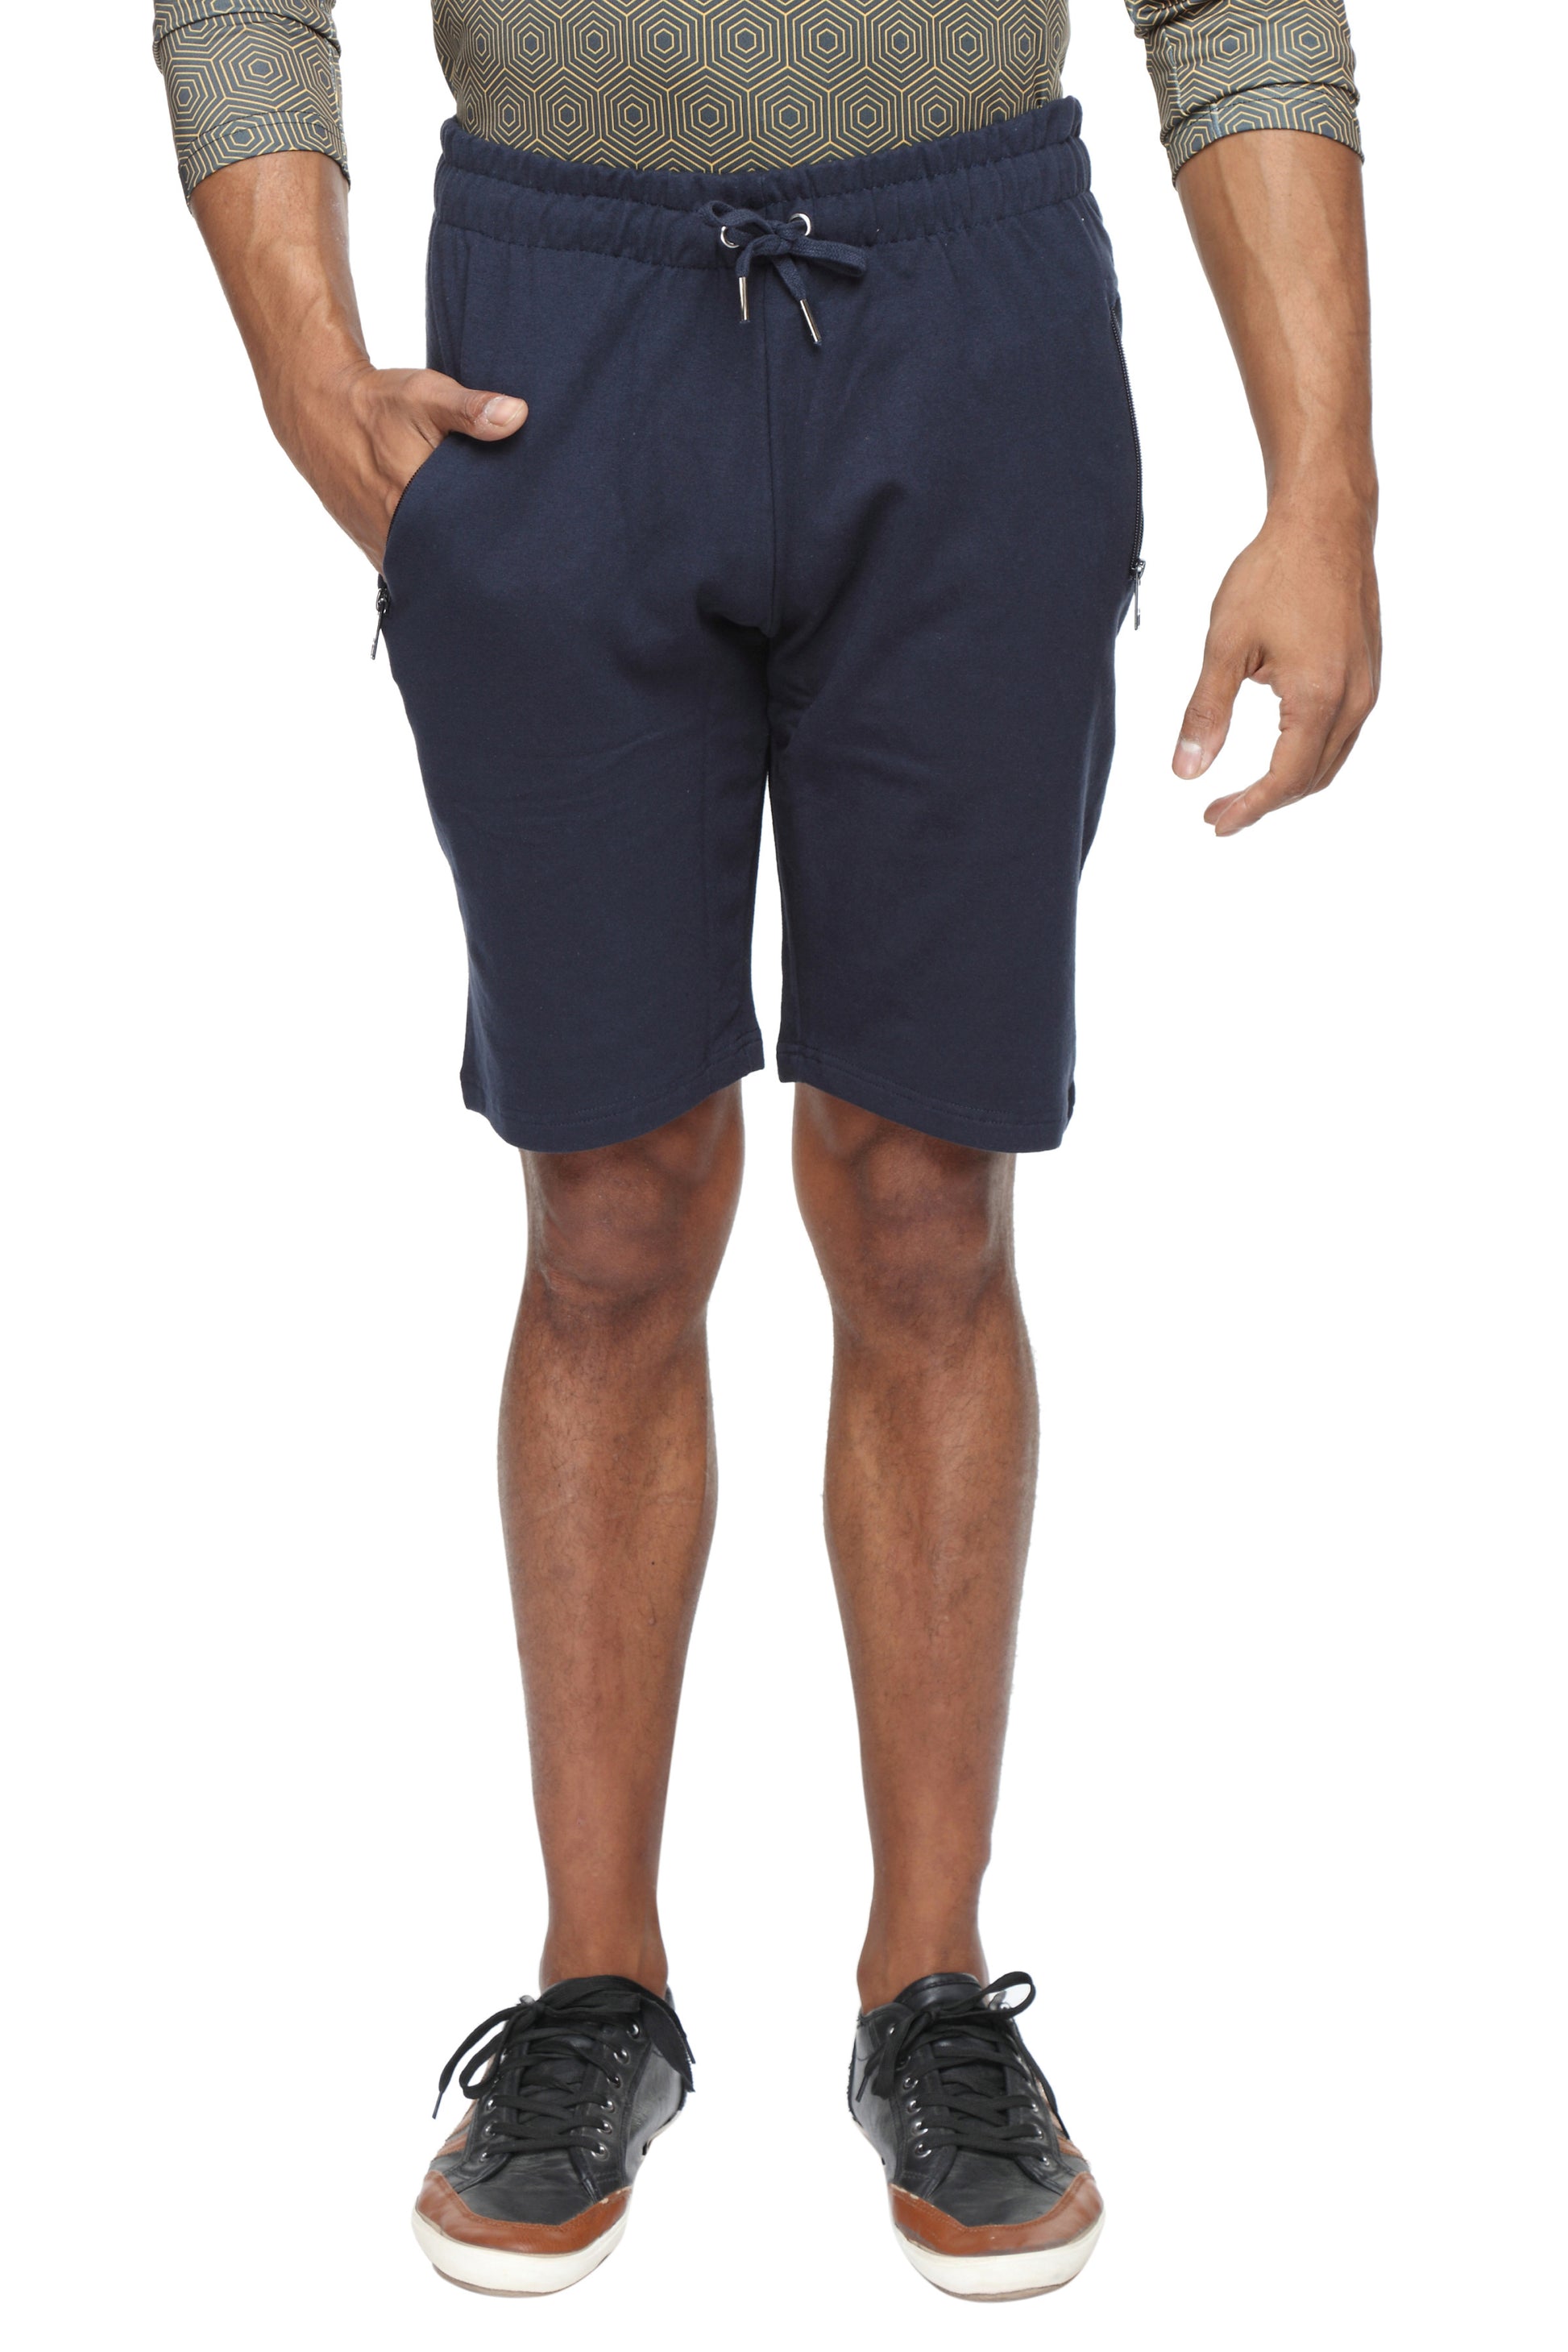 Cotton casual training Shorts- Navy Blue - Zebo Active Wear